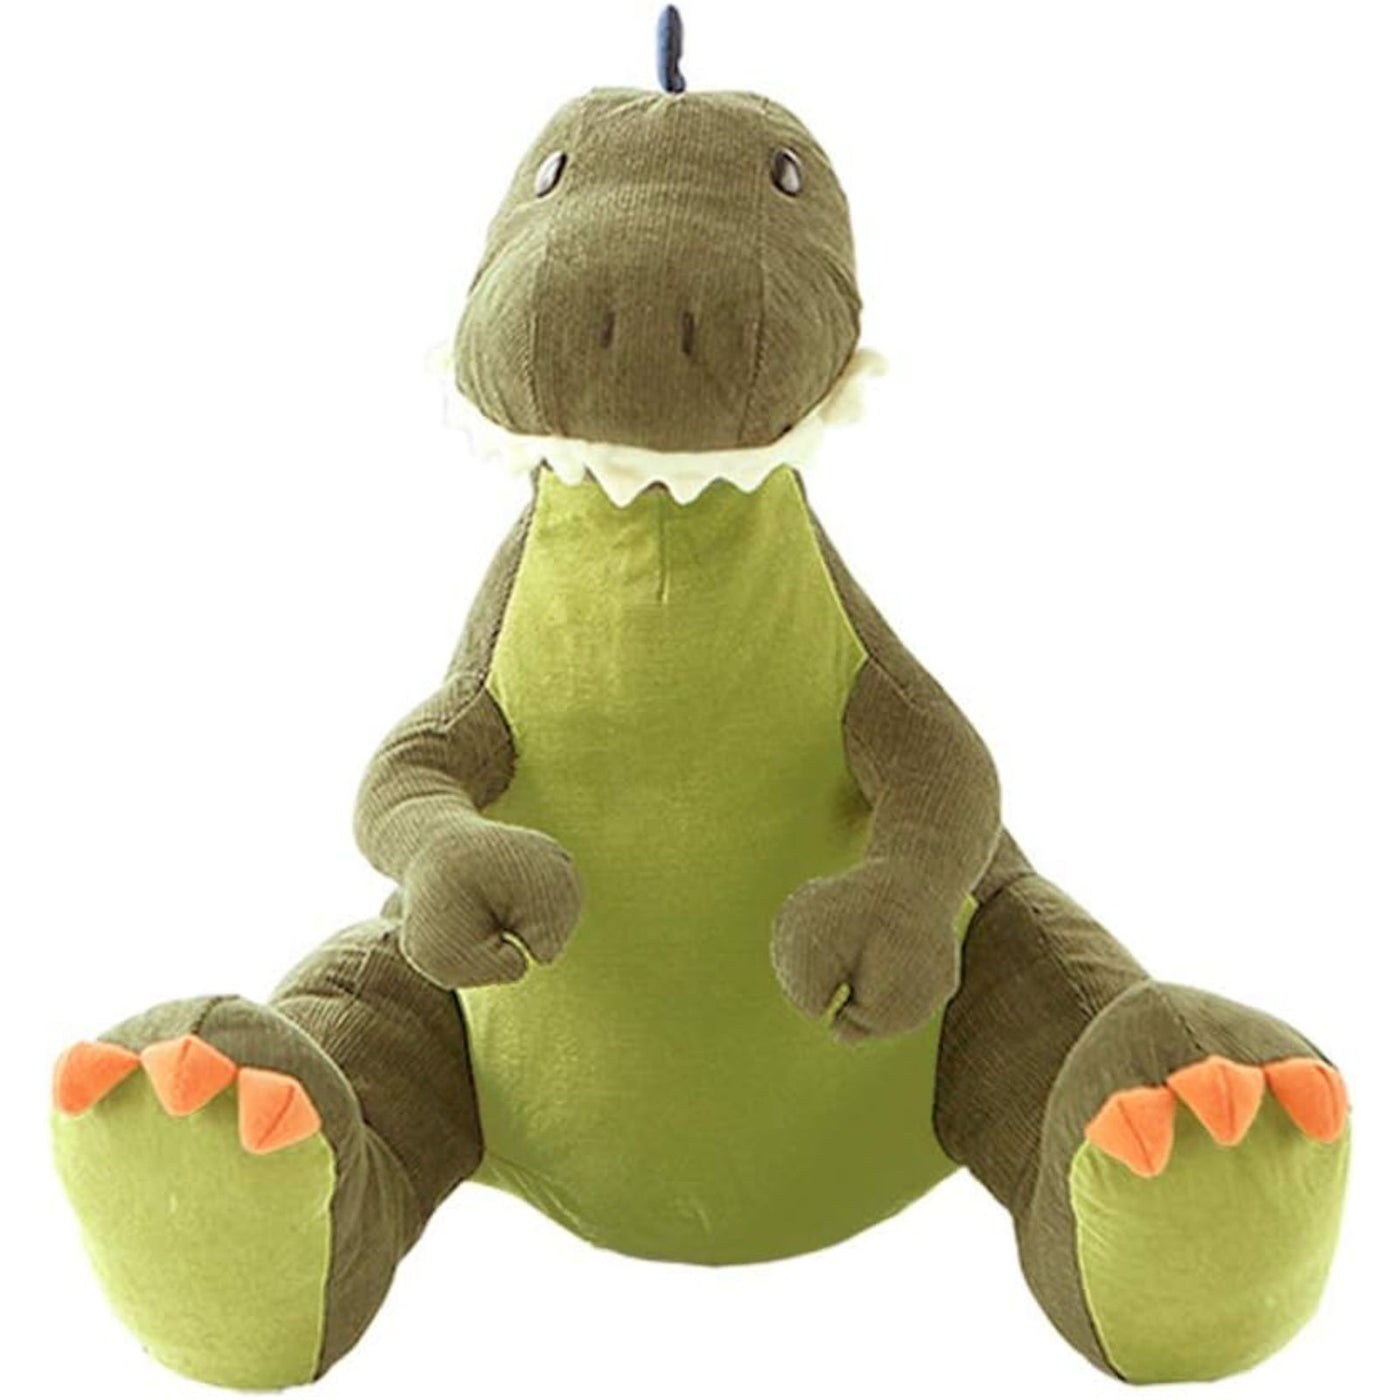 Dinosaur Plush Toy, Green, 15 Inches